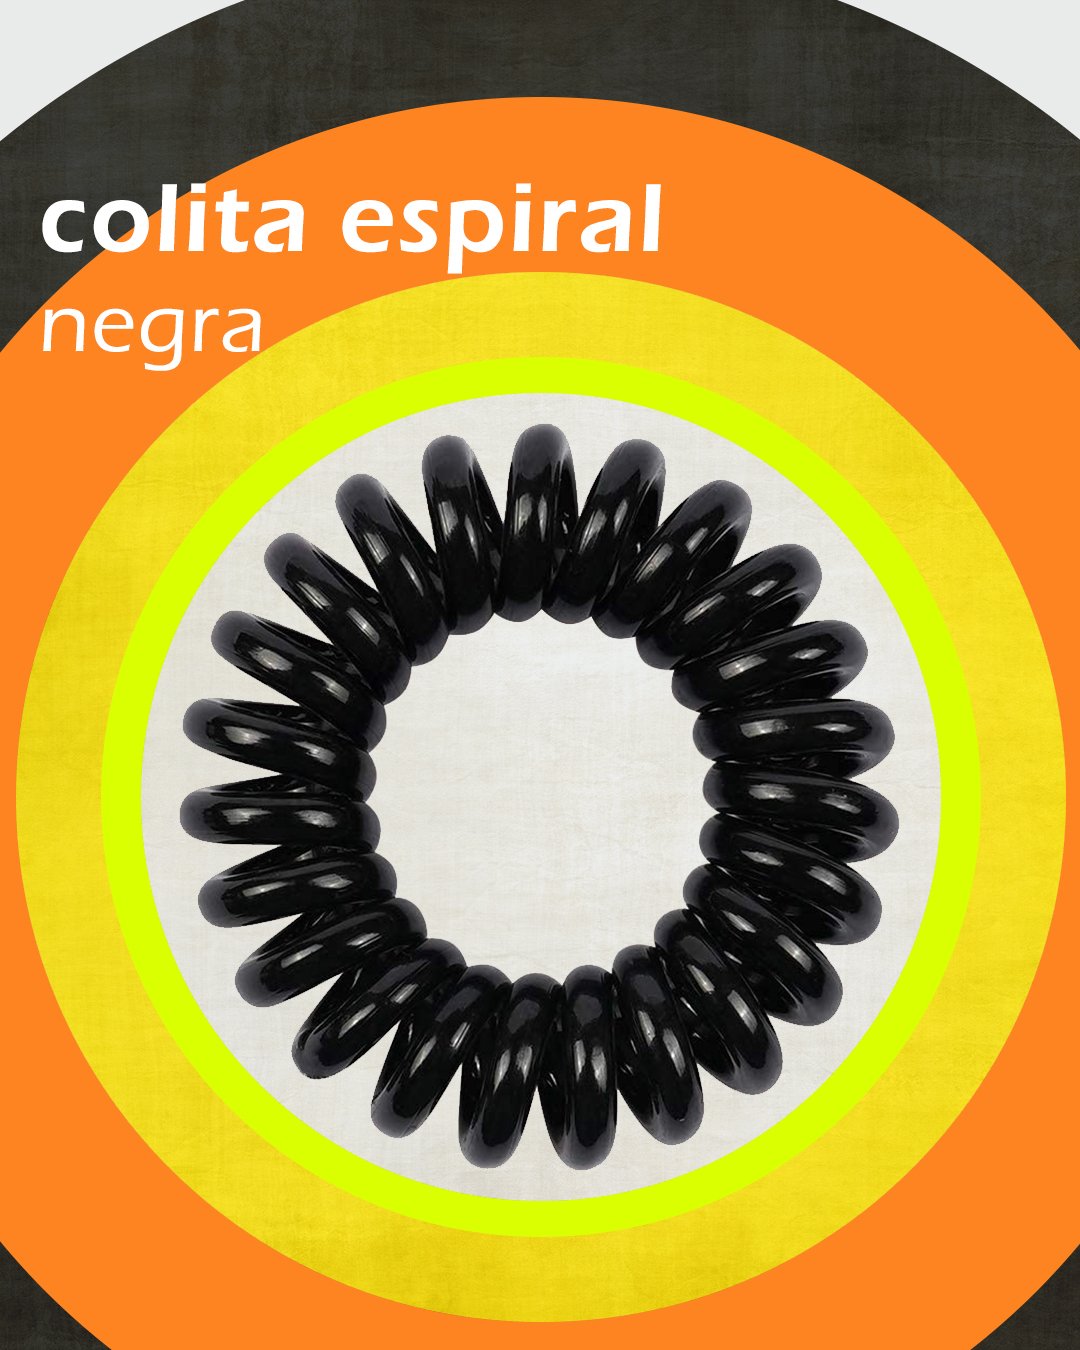 Colita espiral negra